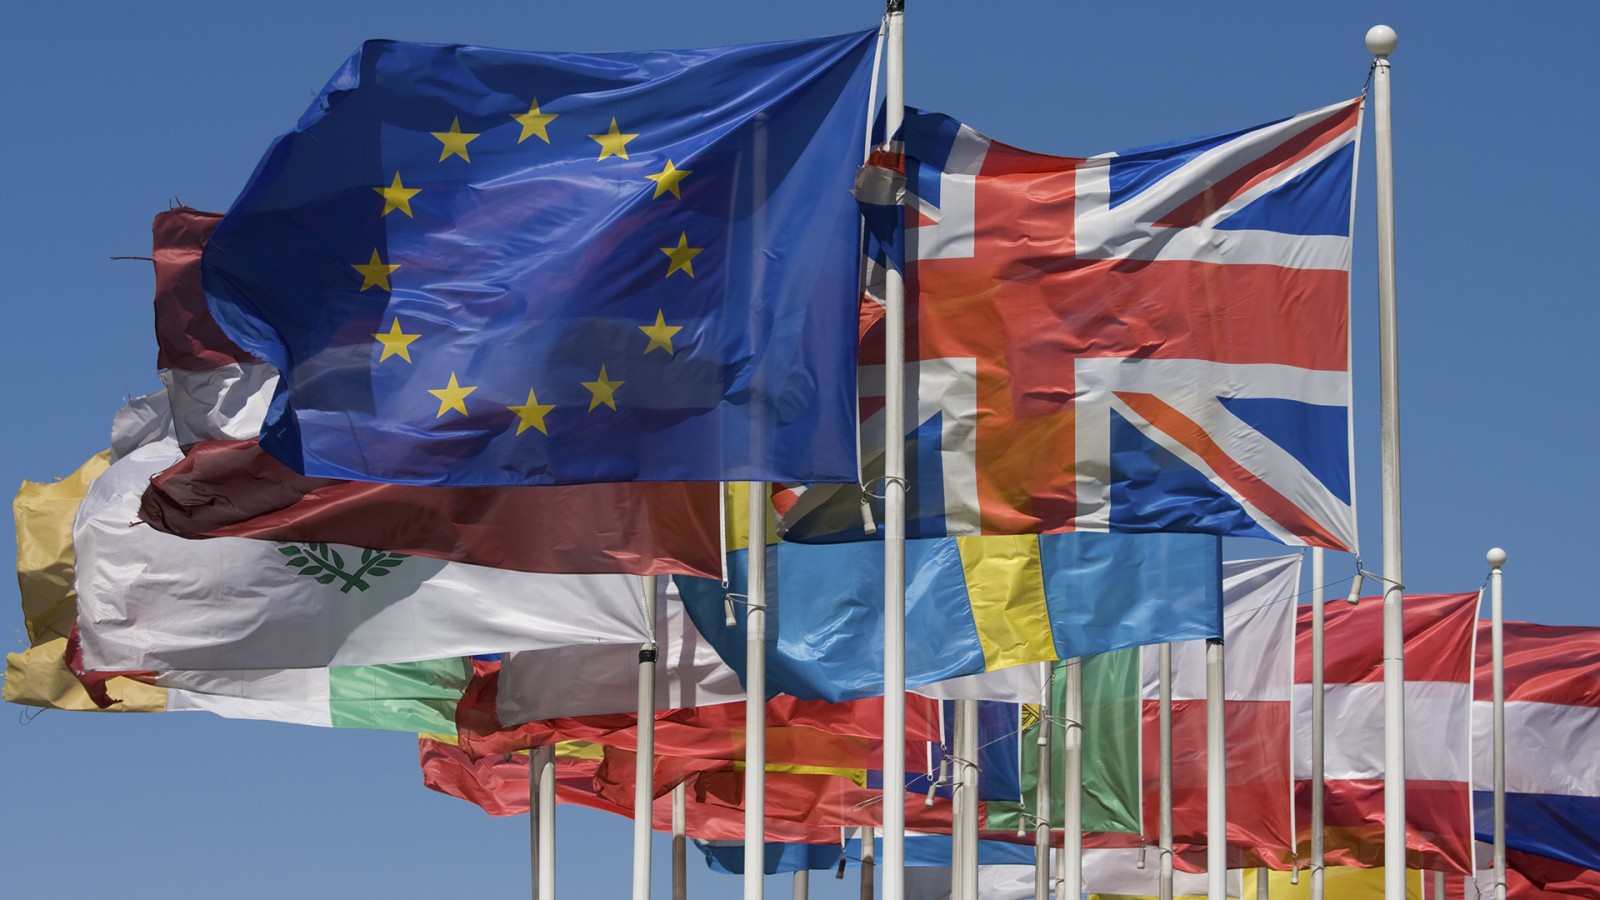 EU and national flags